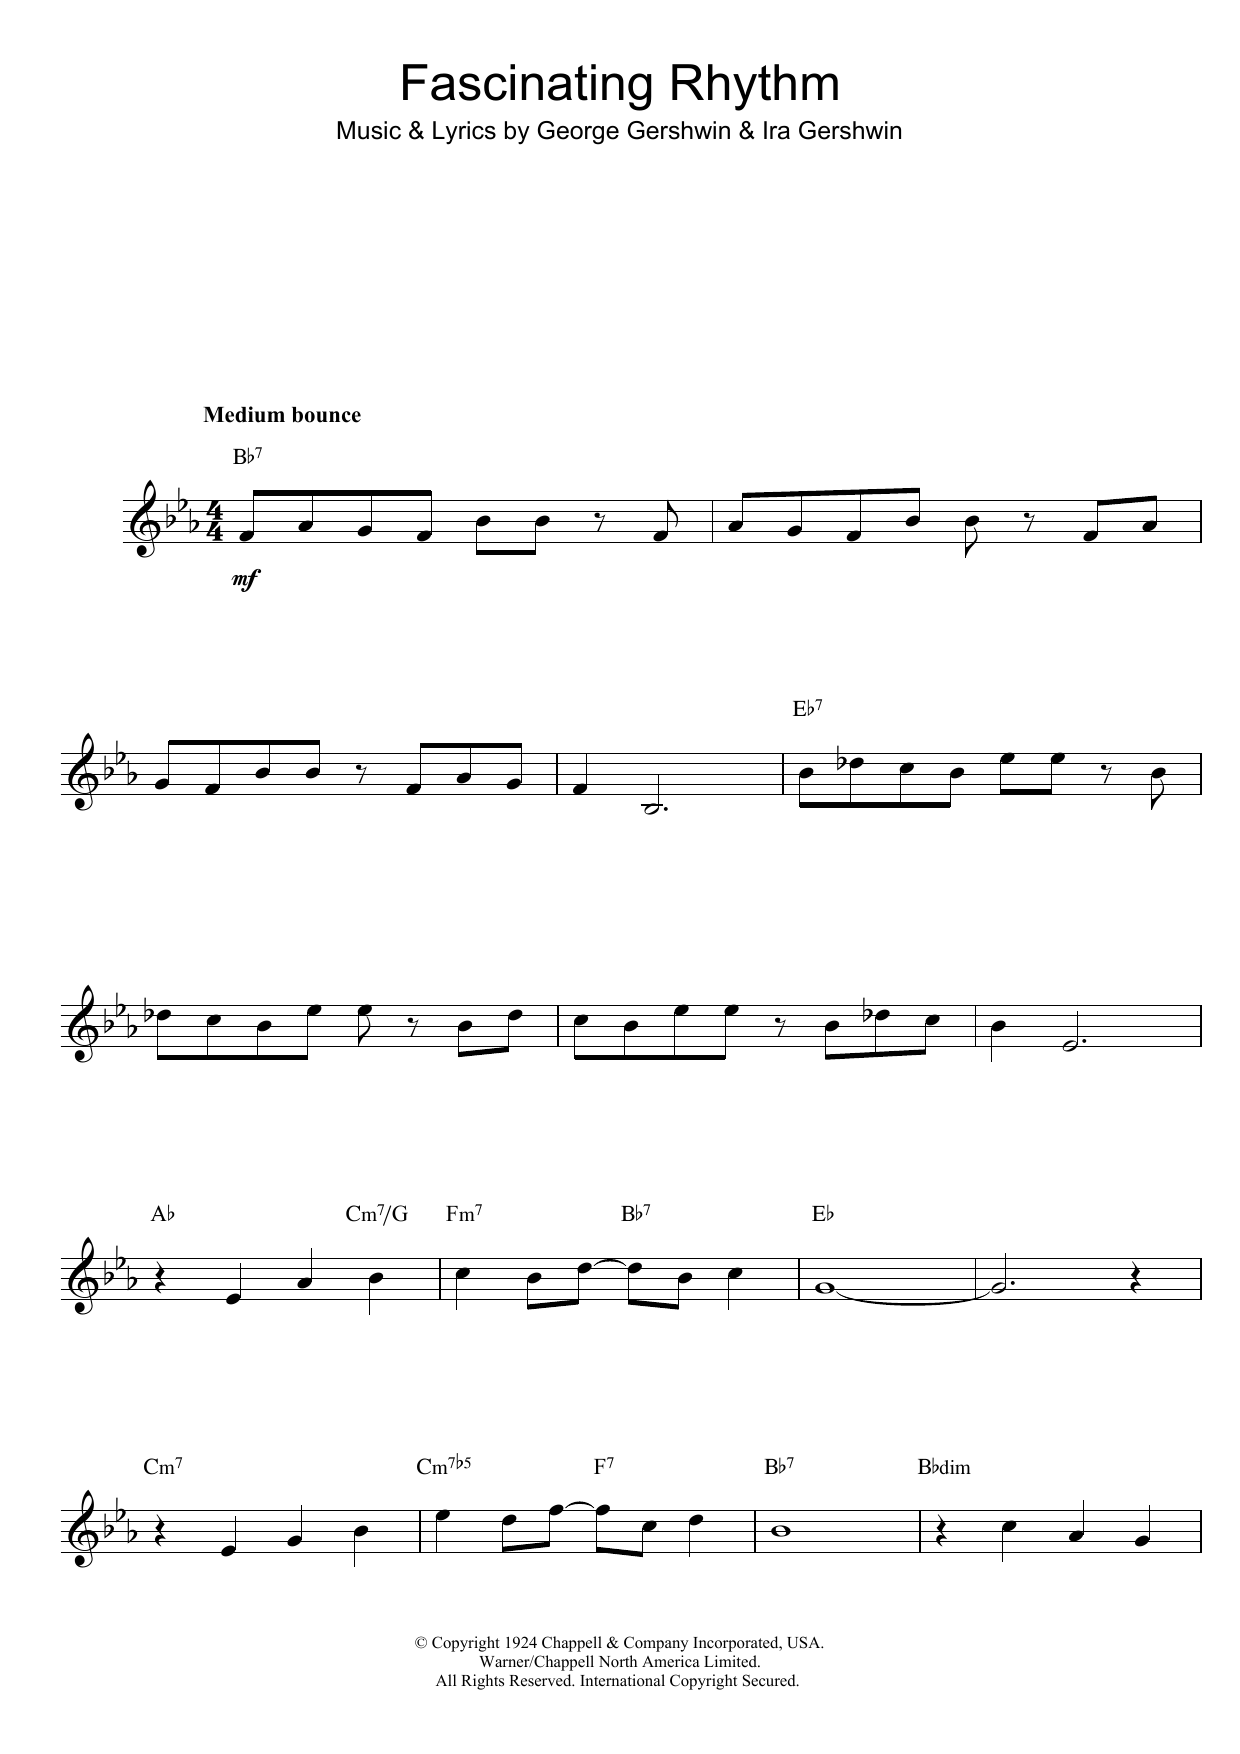 George Gershwin Fascinating Rhythm Sheet Music Notes & Chords for Lead Sheet / Fake Book - Download or Print PDF